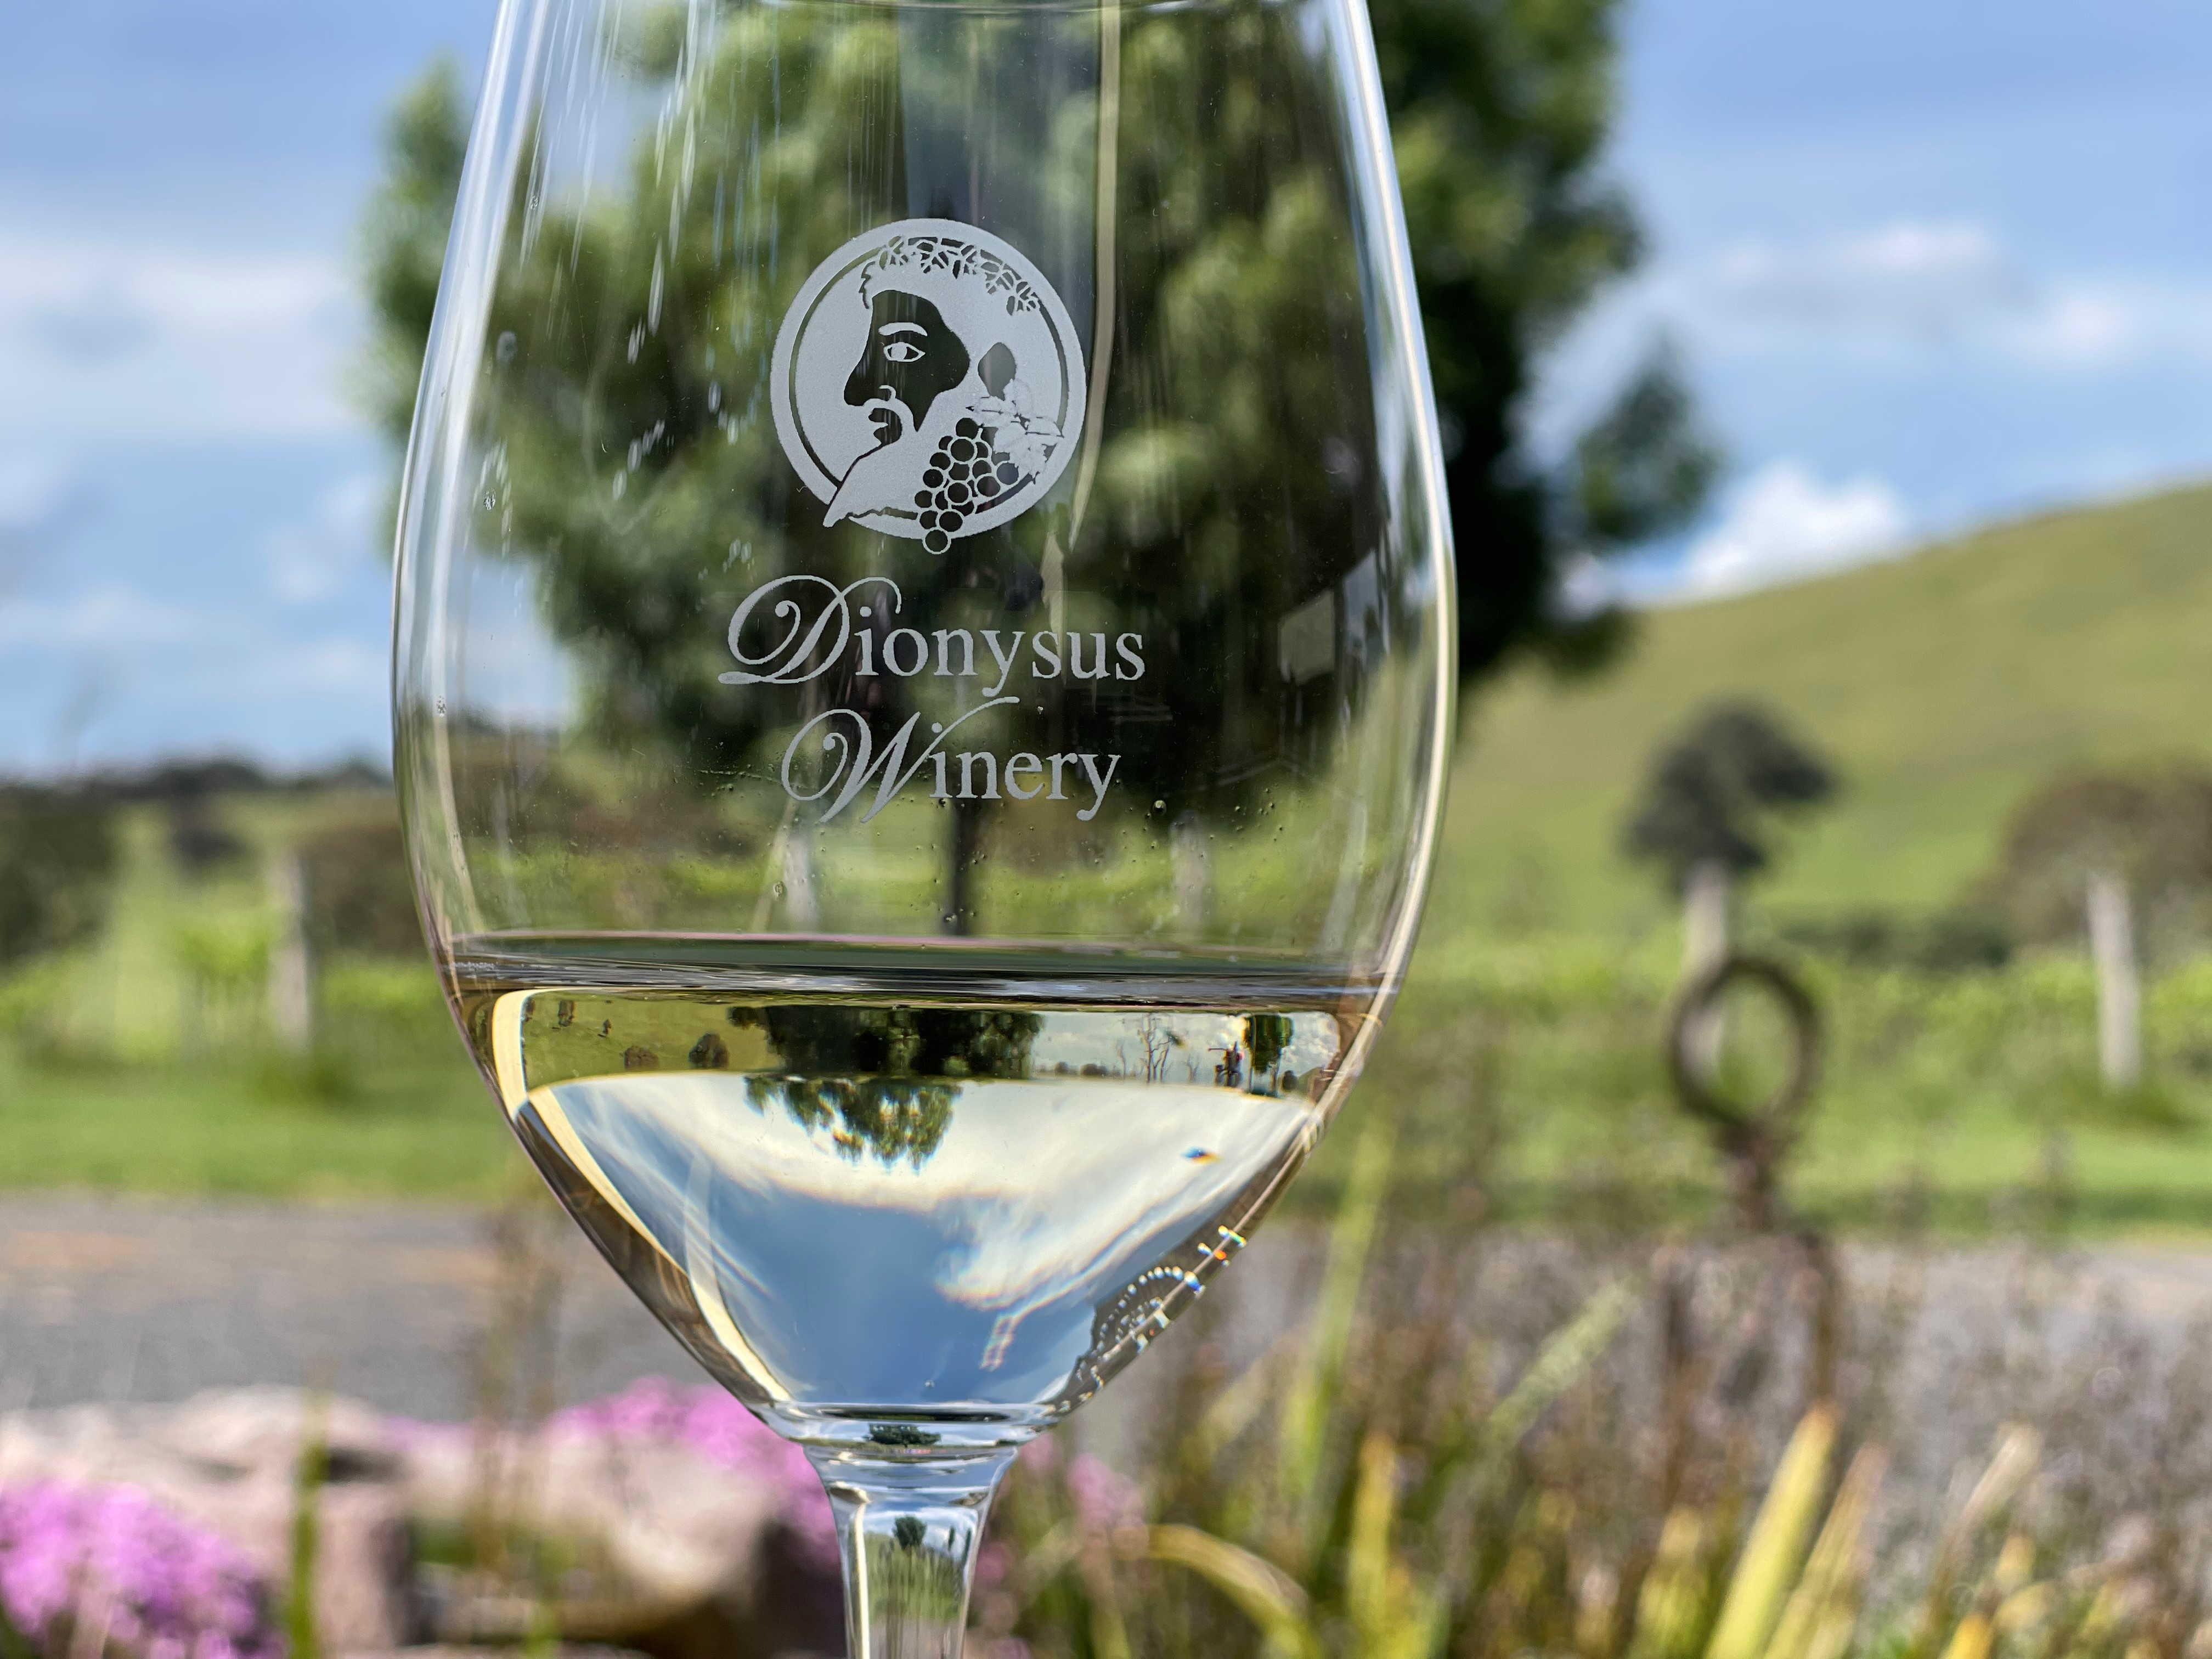 Dionysus Winery wineglass outside 